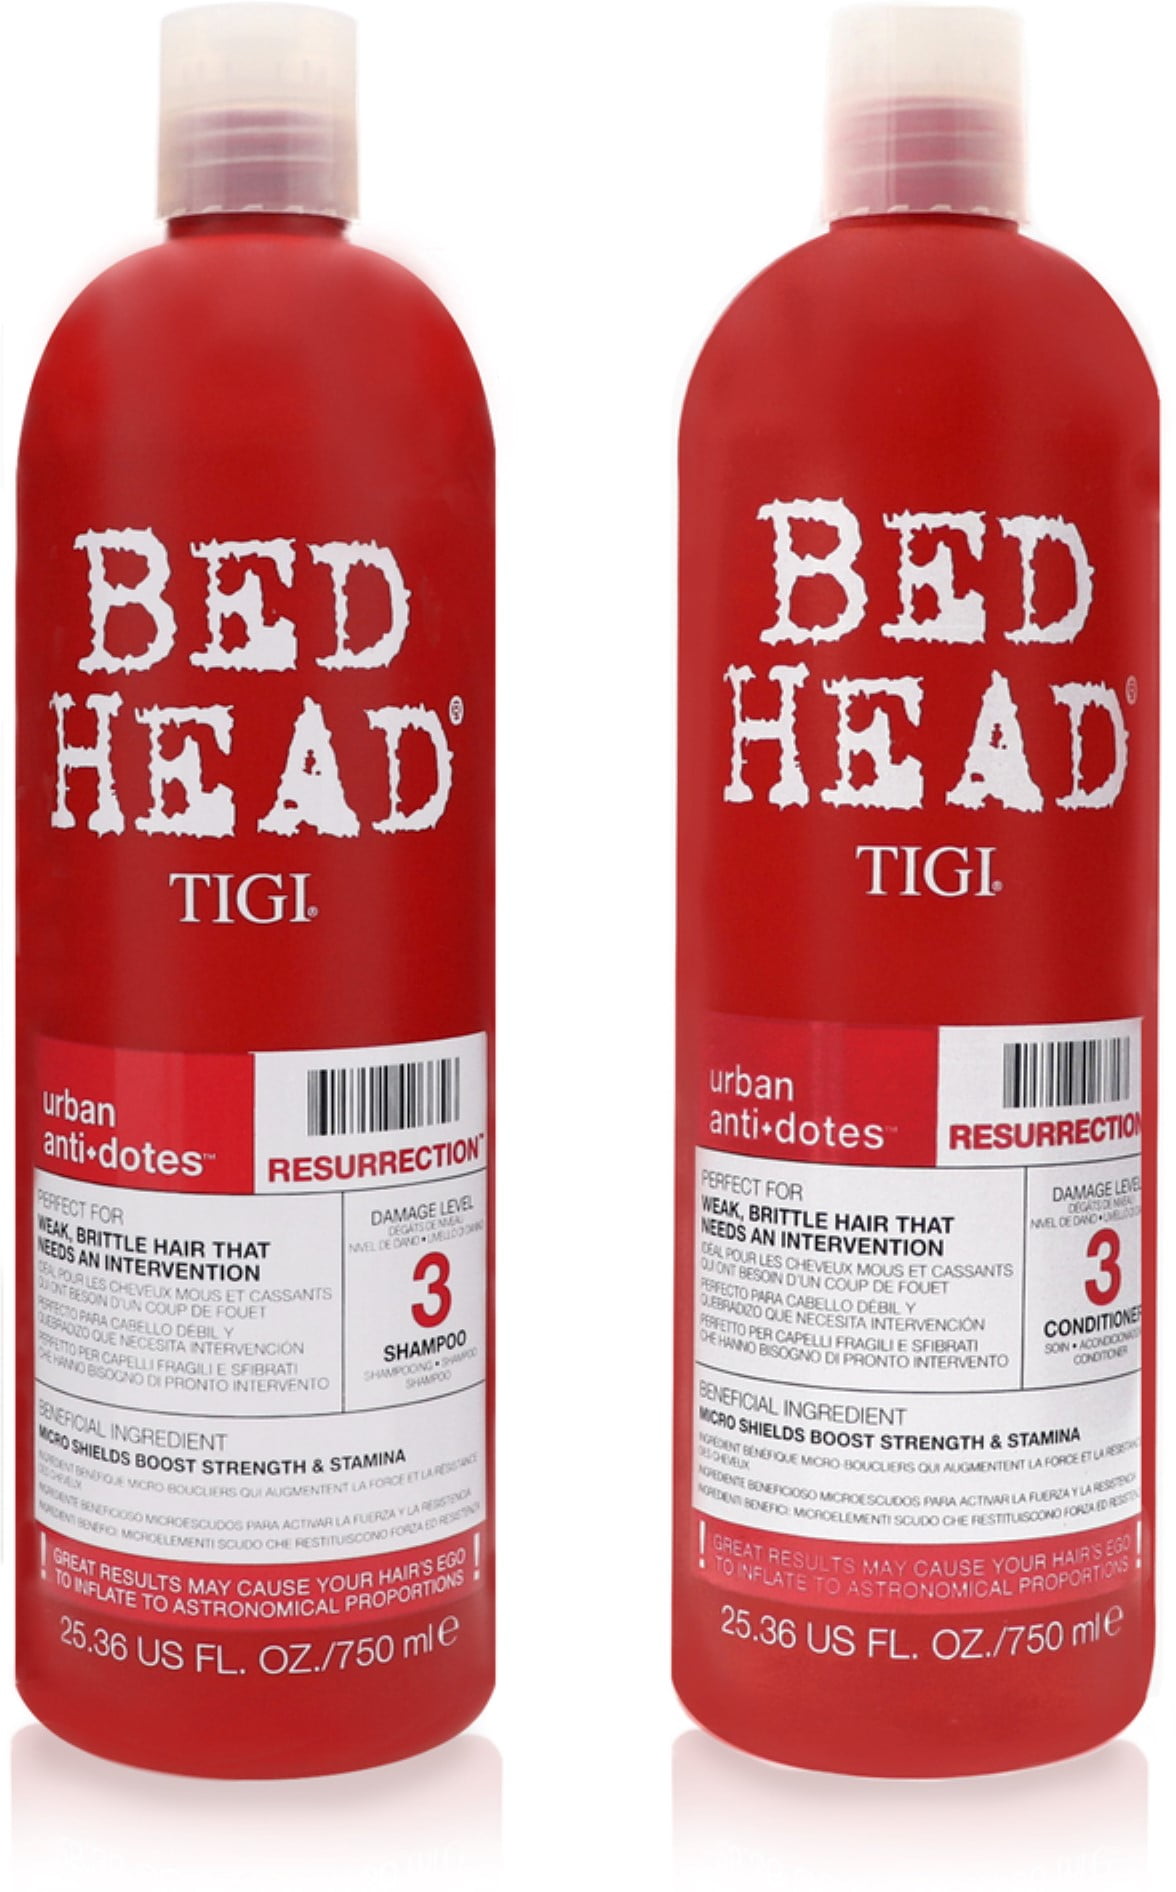 Pack Bed Head By Tigi Repair Shampoo And Conditioner Set Walmart